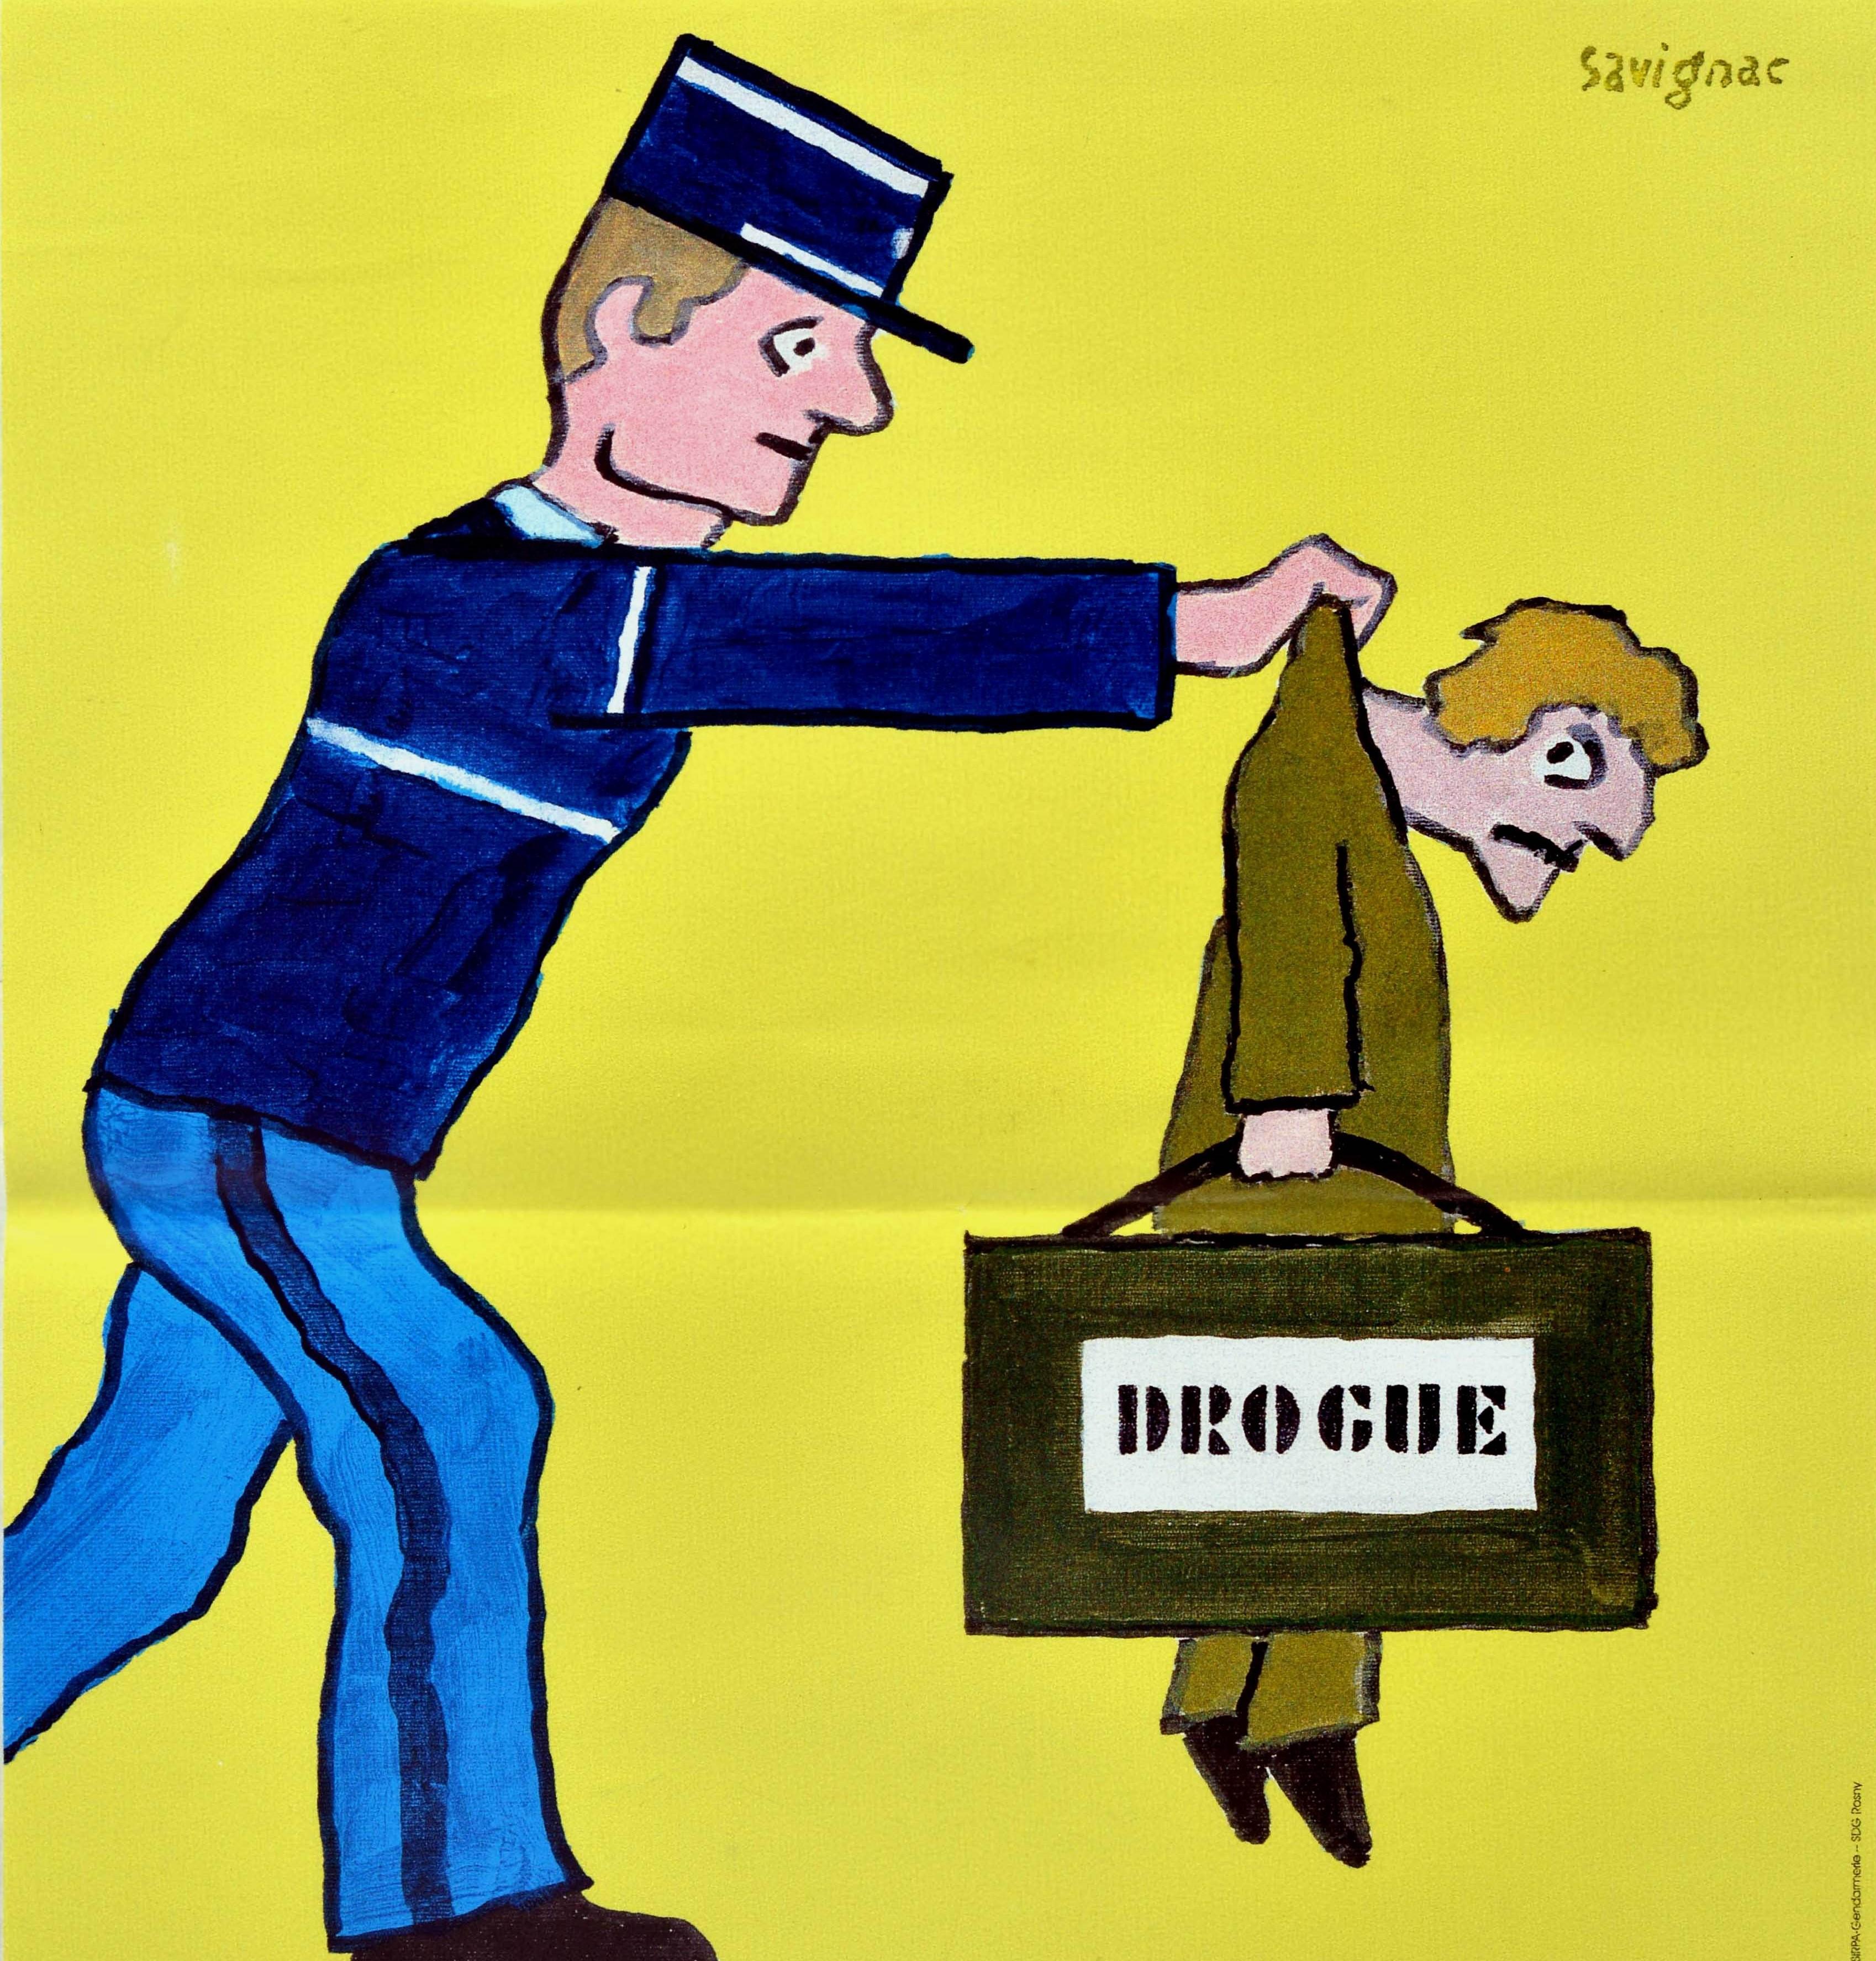 Original Vintage Poster Drogue Le Gendarme Sevit French Police Drug Dealer Bust - Print by Raymond Savignac